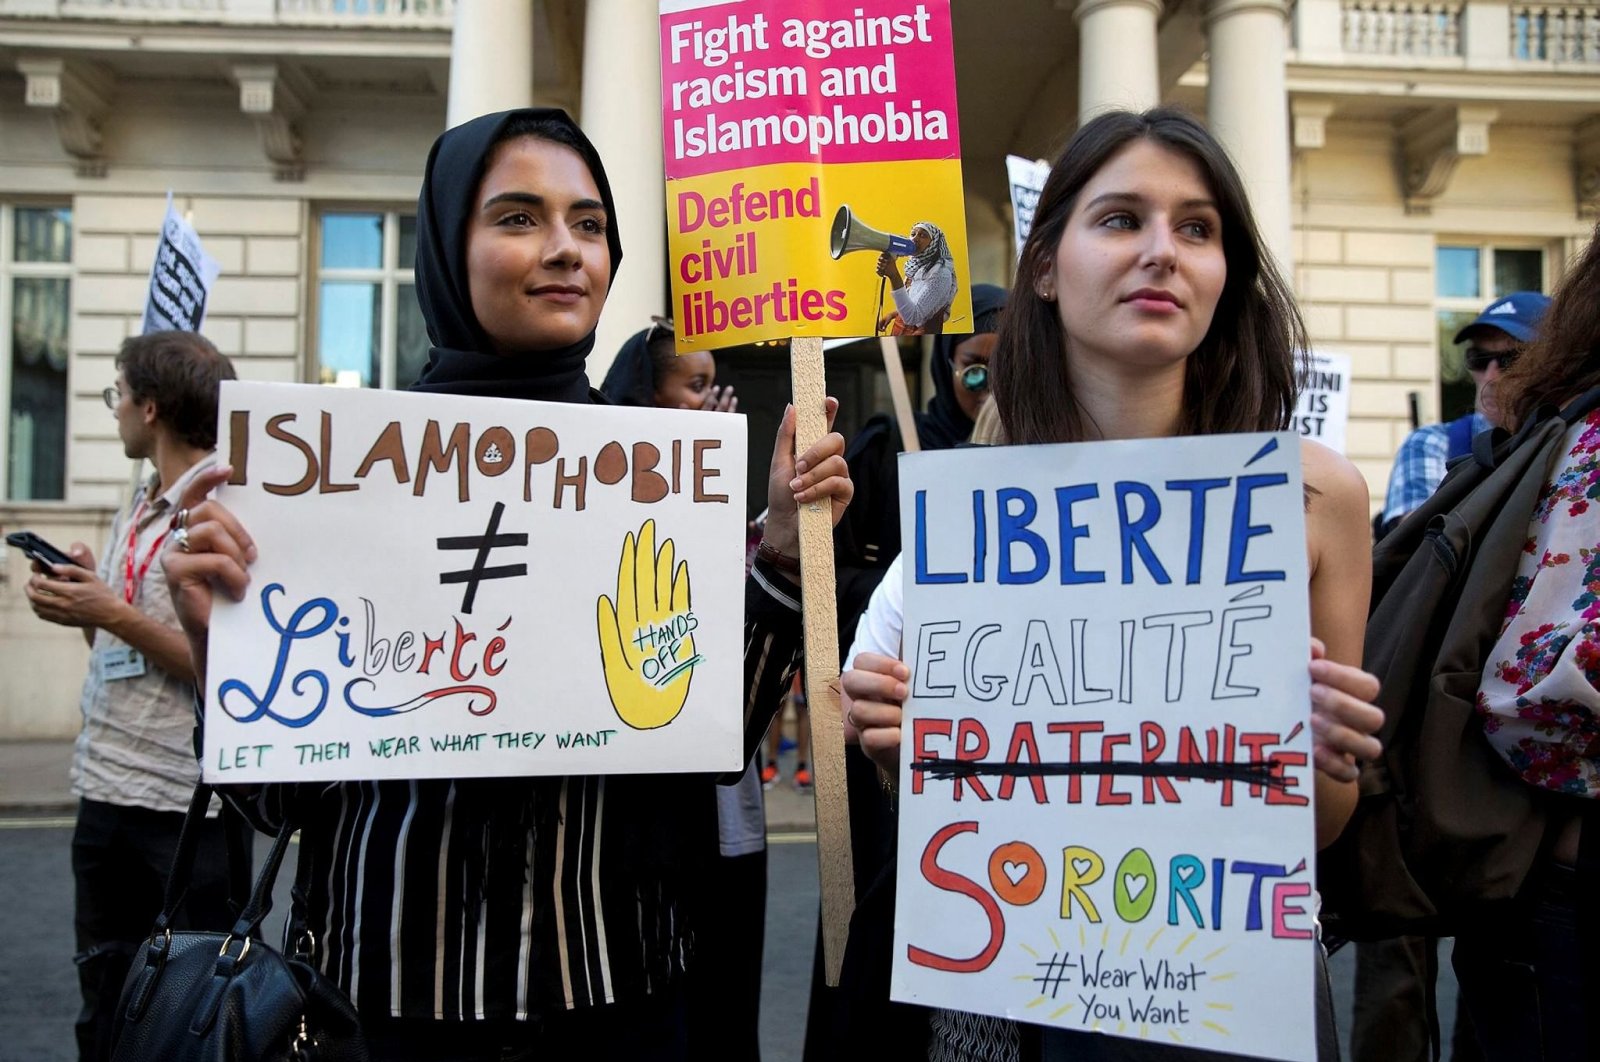 entop mengecam ‘kemunafikan’ Prancis atas kampanye keragaman pro-Muslim